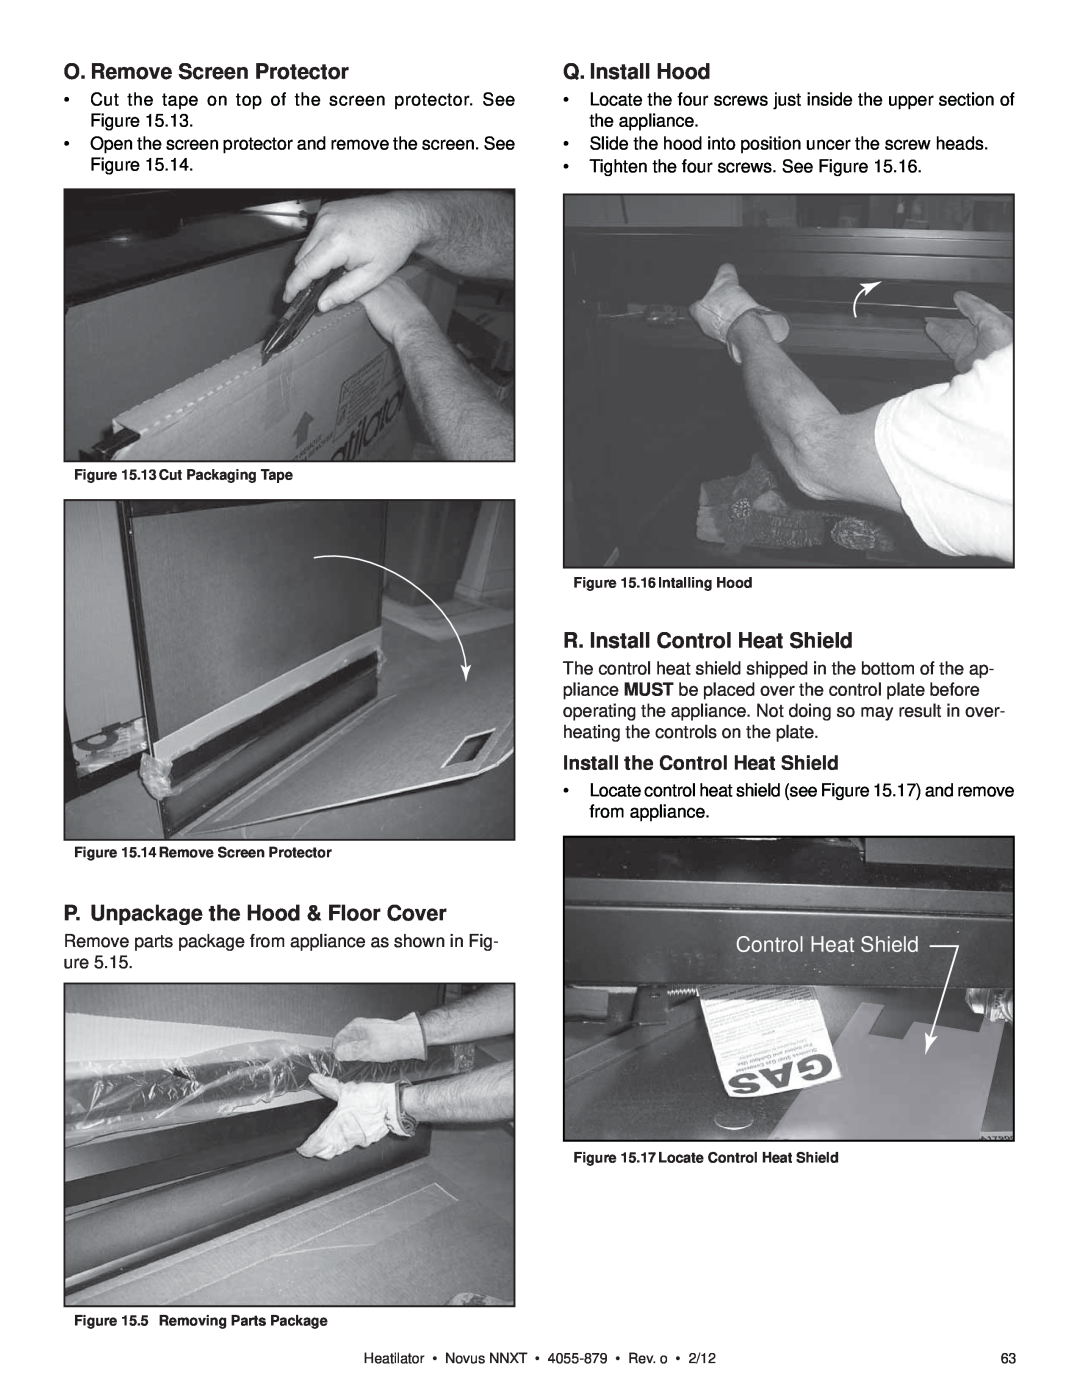 Heatiator NNXT3933IL O. Remove Screen Protector, Q. Install Hood, P. Unpackage the Hood & Floor Cover, Control Heat Shield 